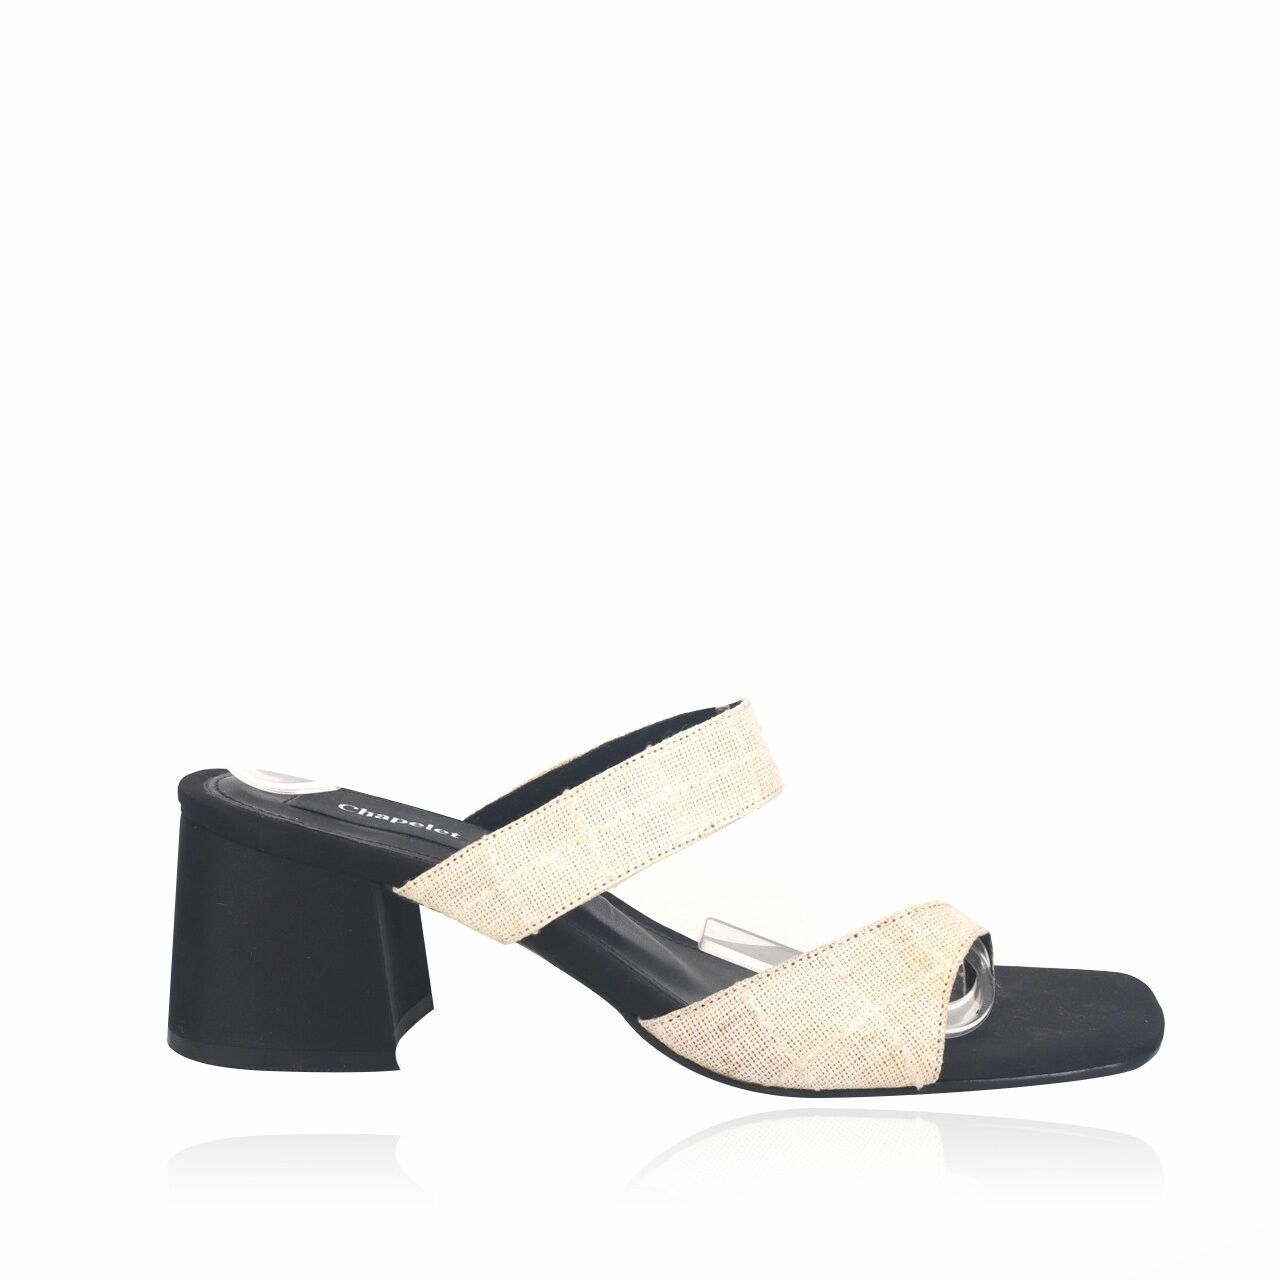 Chapelet Black & Ivory Heels